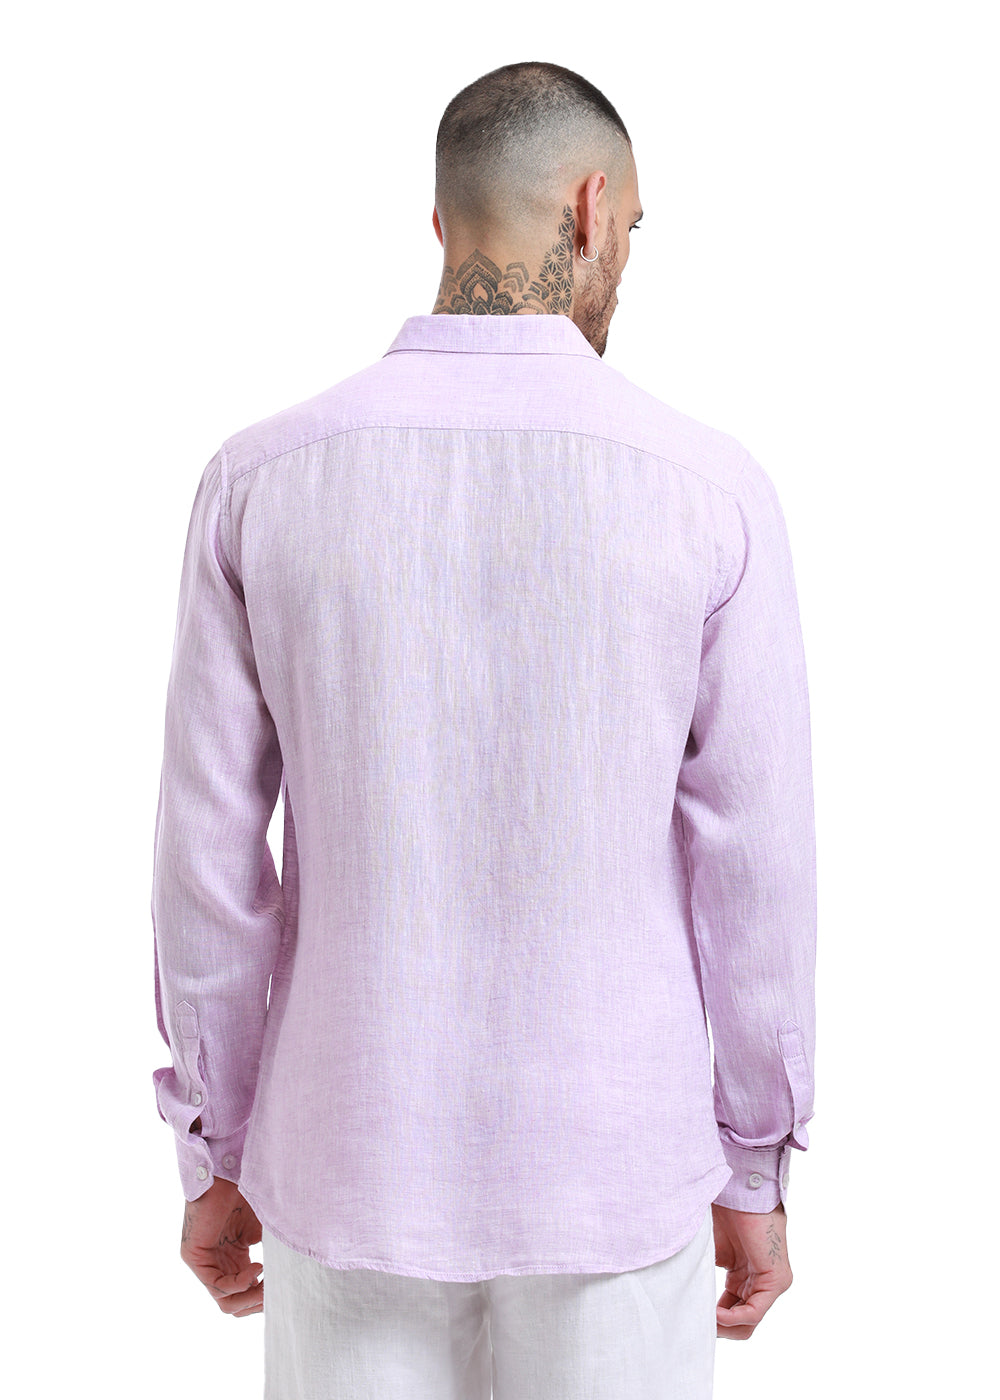 Pastel Purple Linen Shirt Rear View